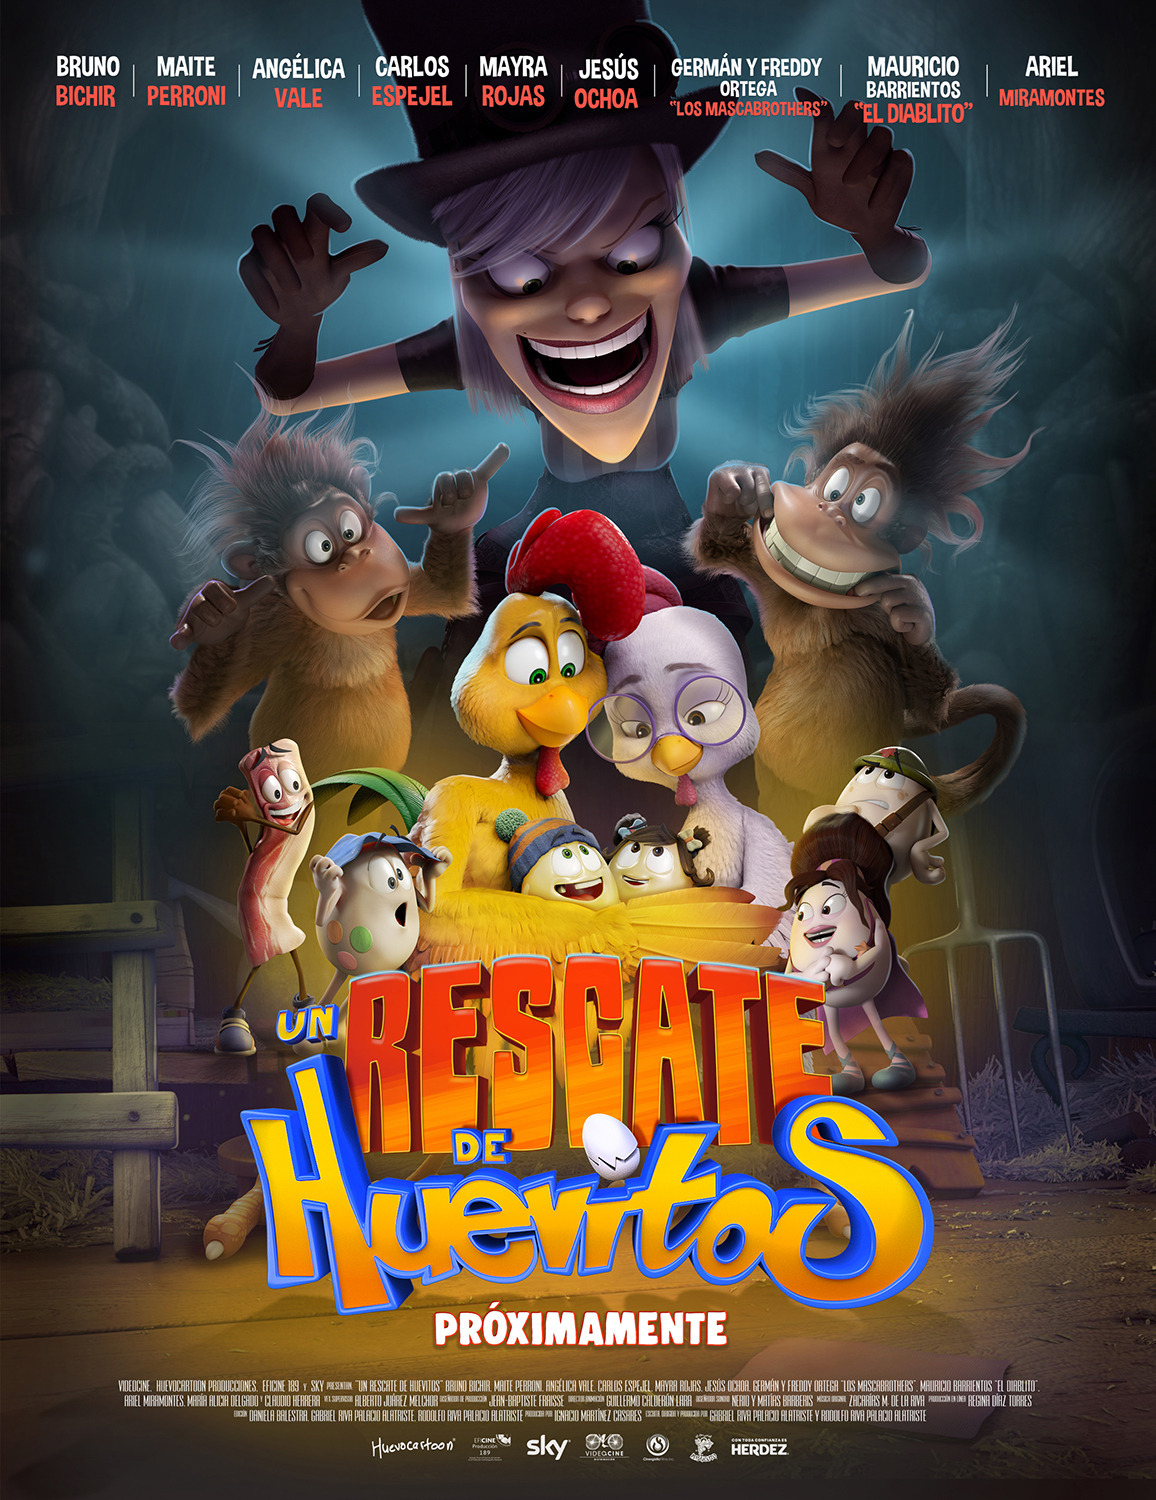 Extra Large Movie Poster Image for Un rescate de huevitos (#1 of 3)